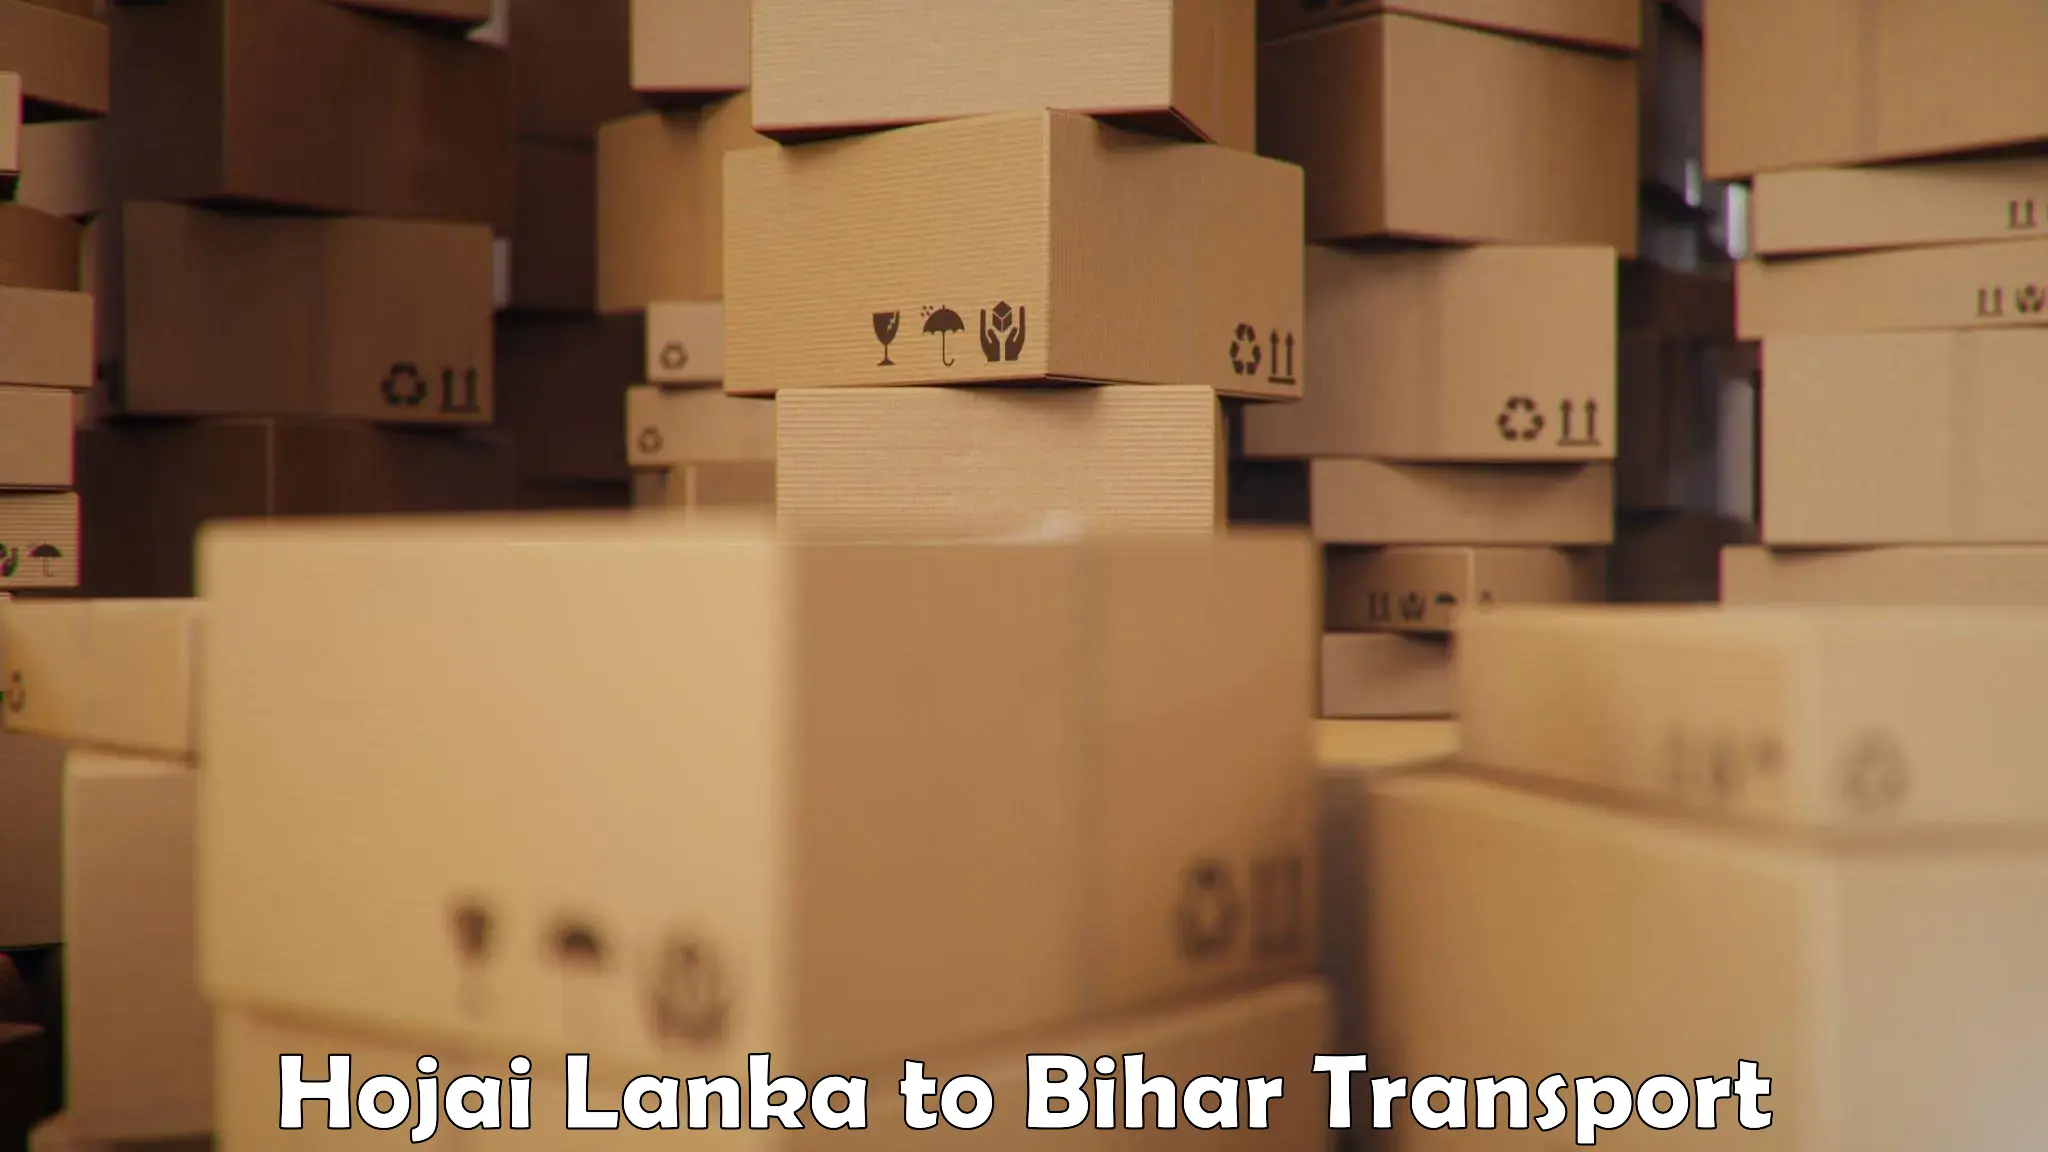 Luggage transport services Hojai Lanka to Dholi Moraul